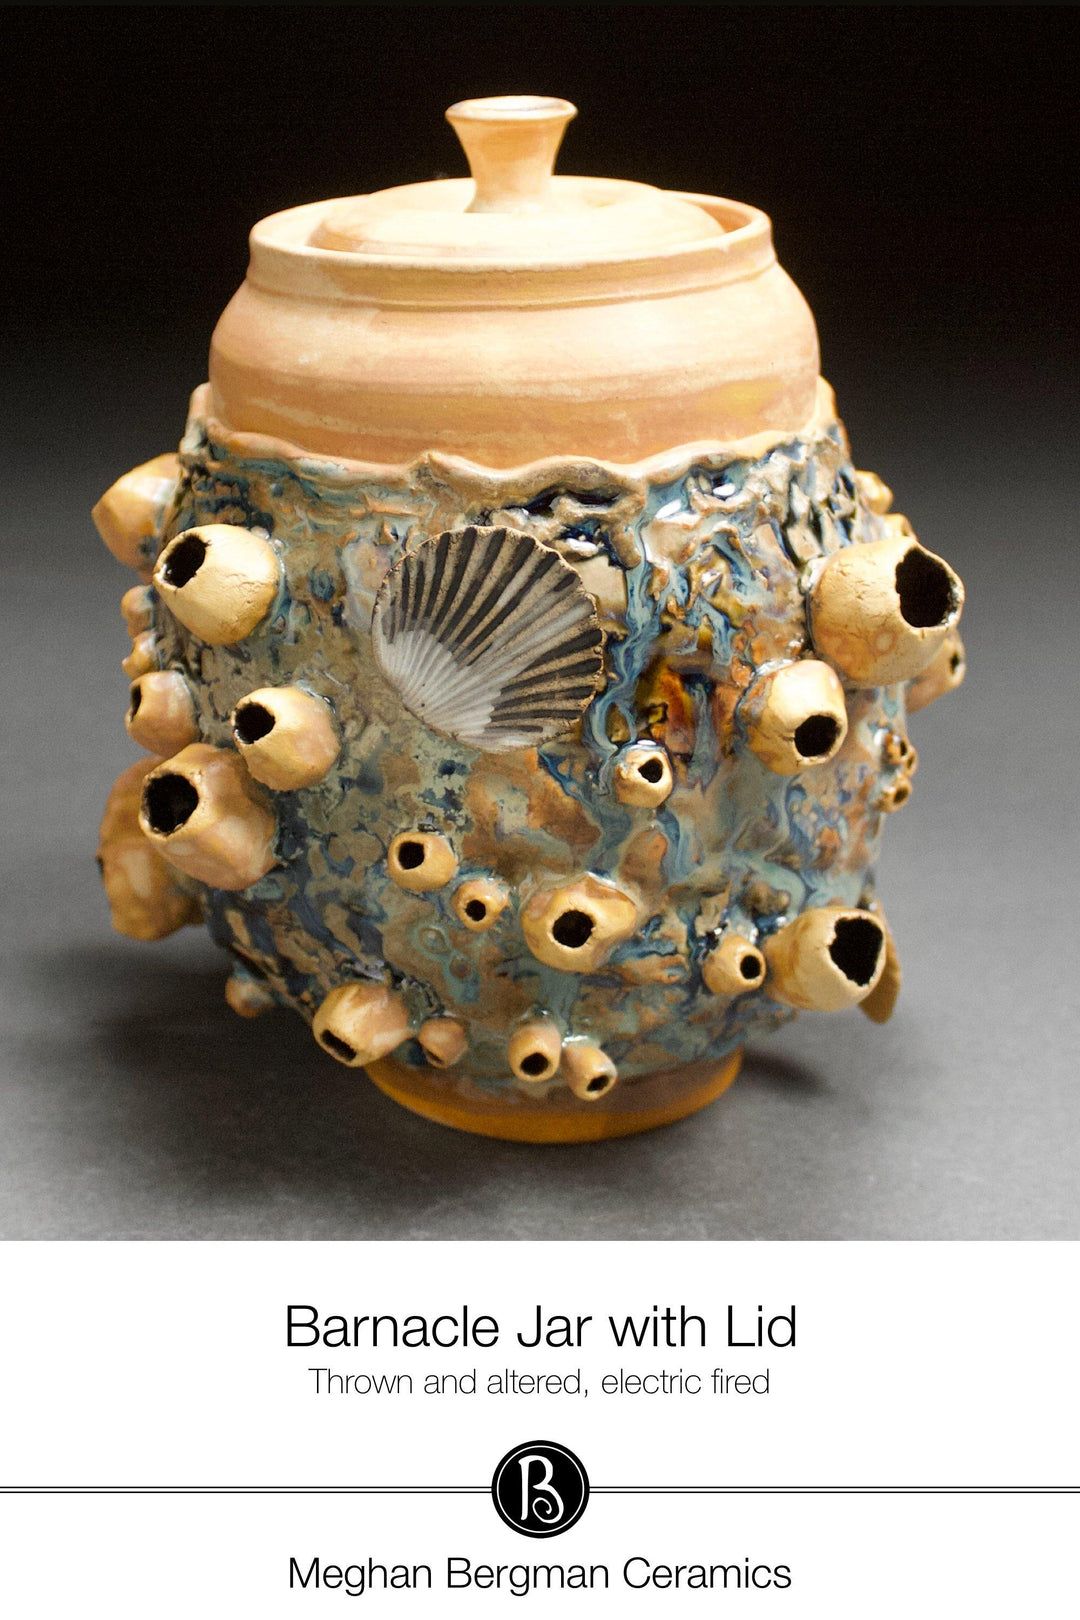 Ceramic Vessel | Ocean Sunset Barnacle Jar with Lid - Meghan Bergman Ceramics - Handmade Pottery & Ceramic Fine Art in Kennett Square, PA